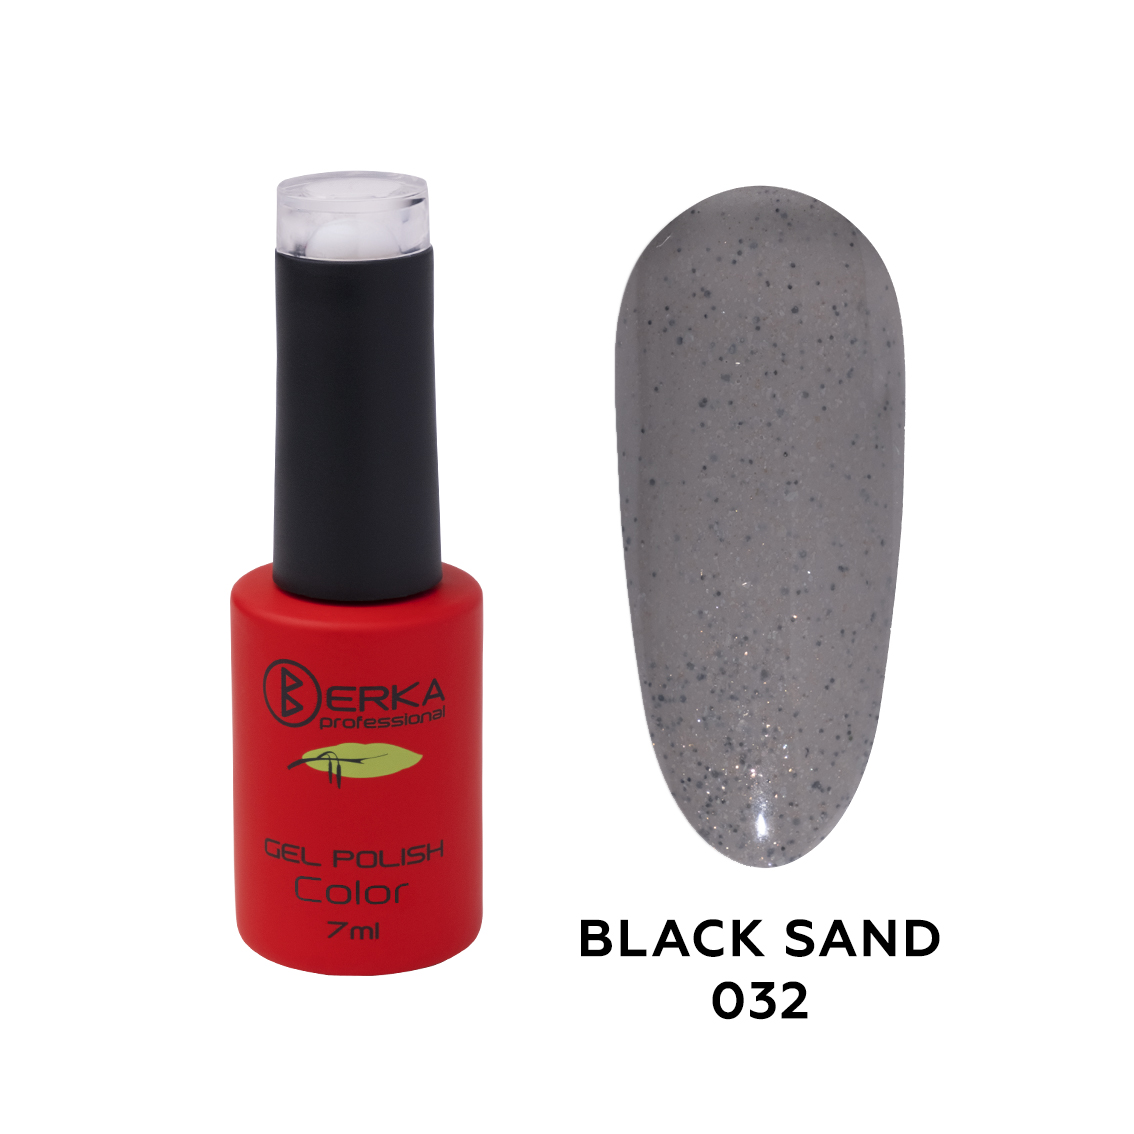 Гель-лак Black Sand №032 7мл Berka